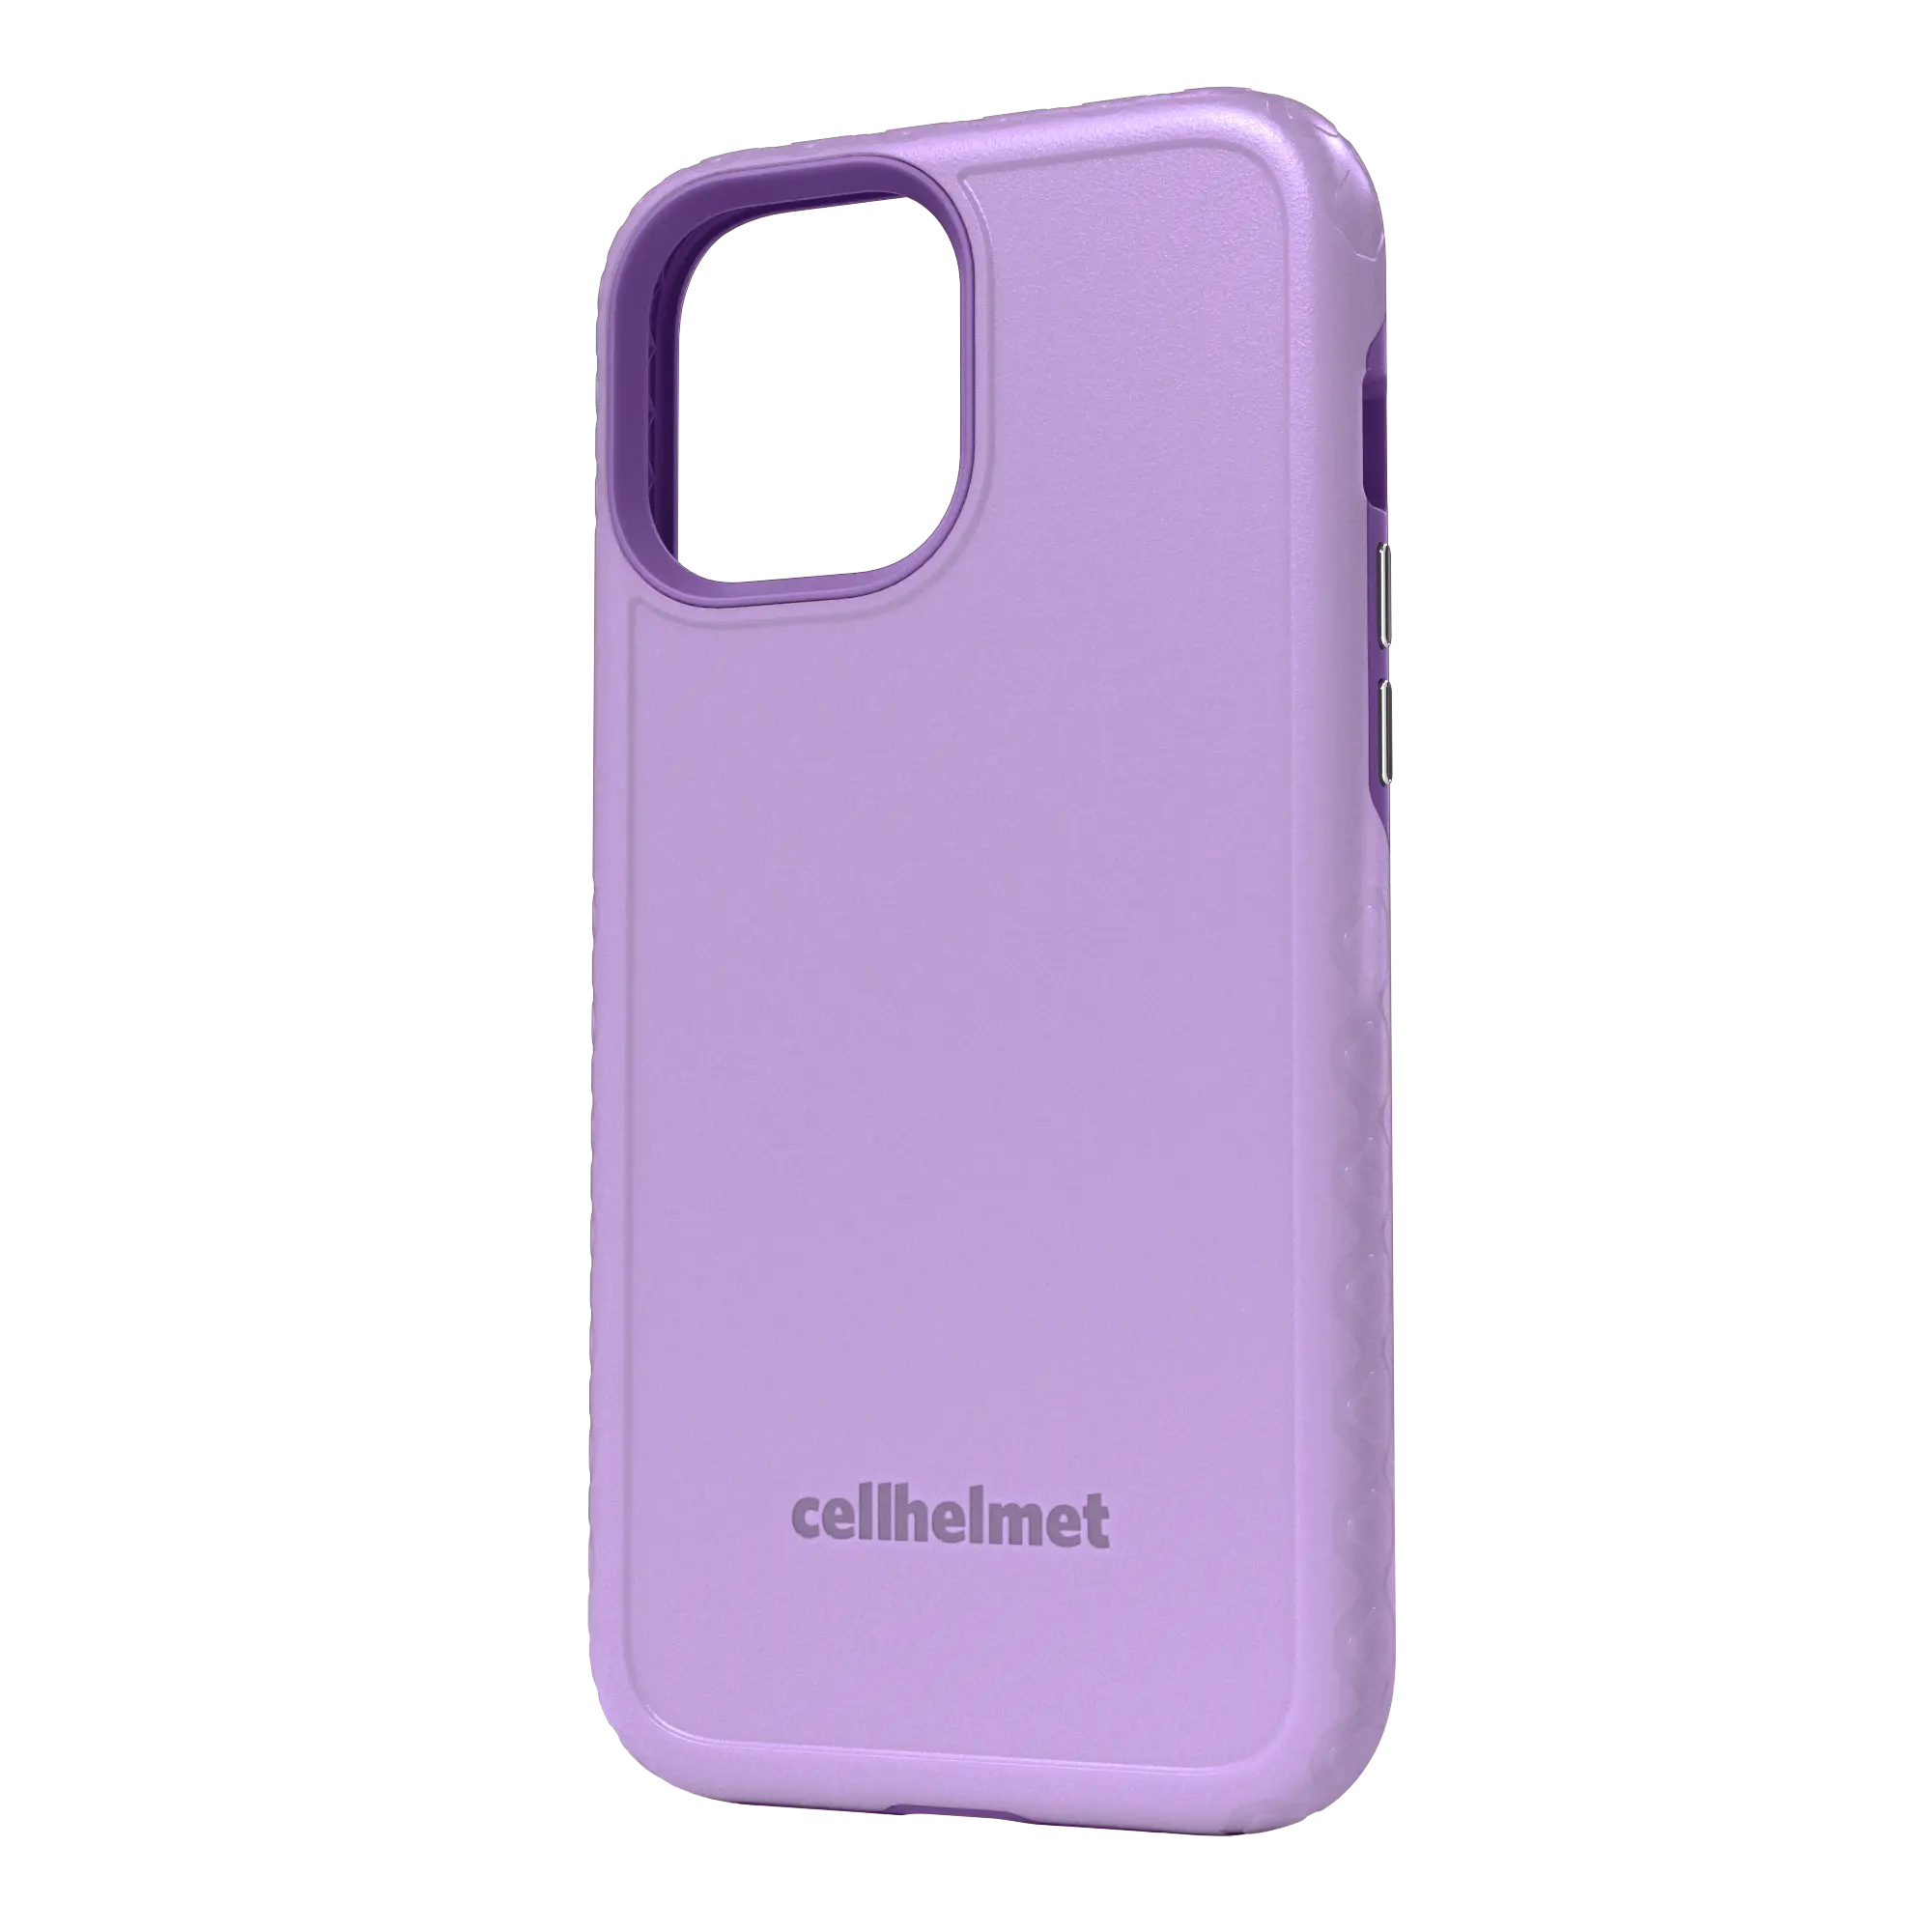 Purple cellhelmet Personalized Case for iPhone 12 Pro Max